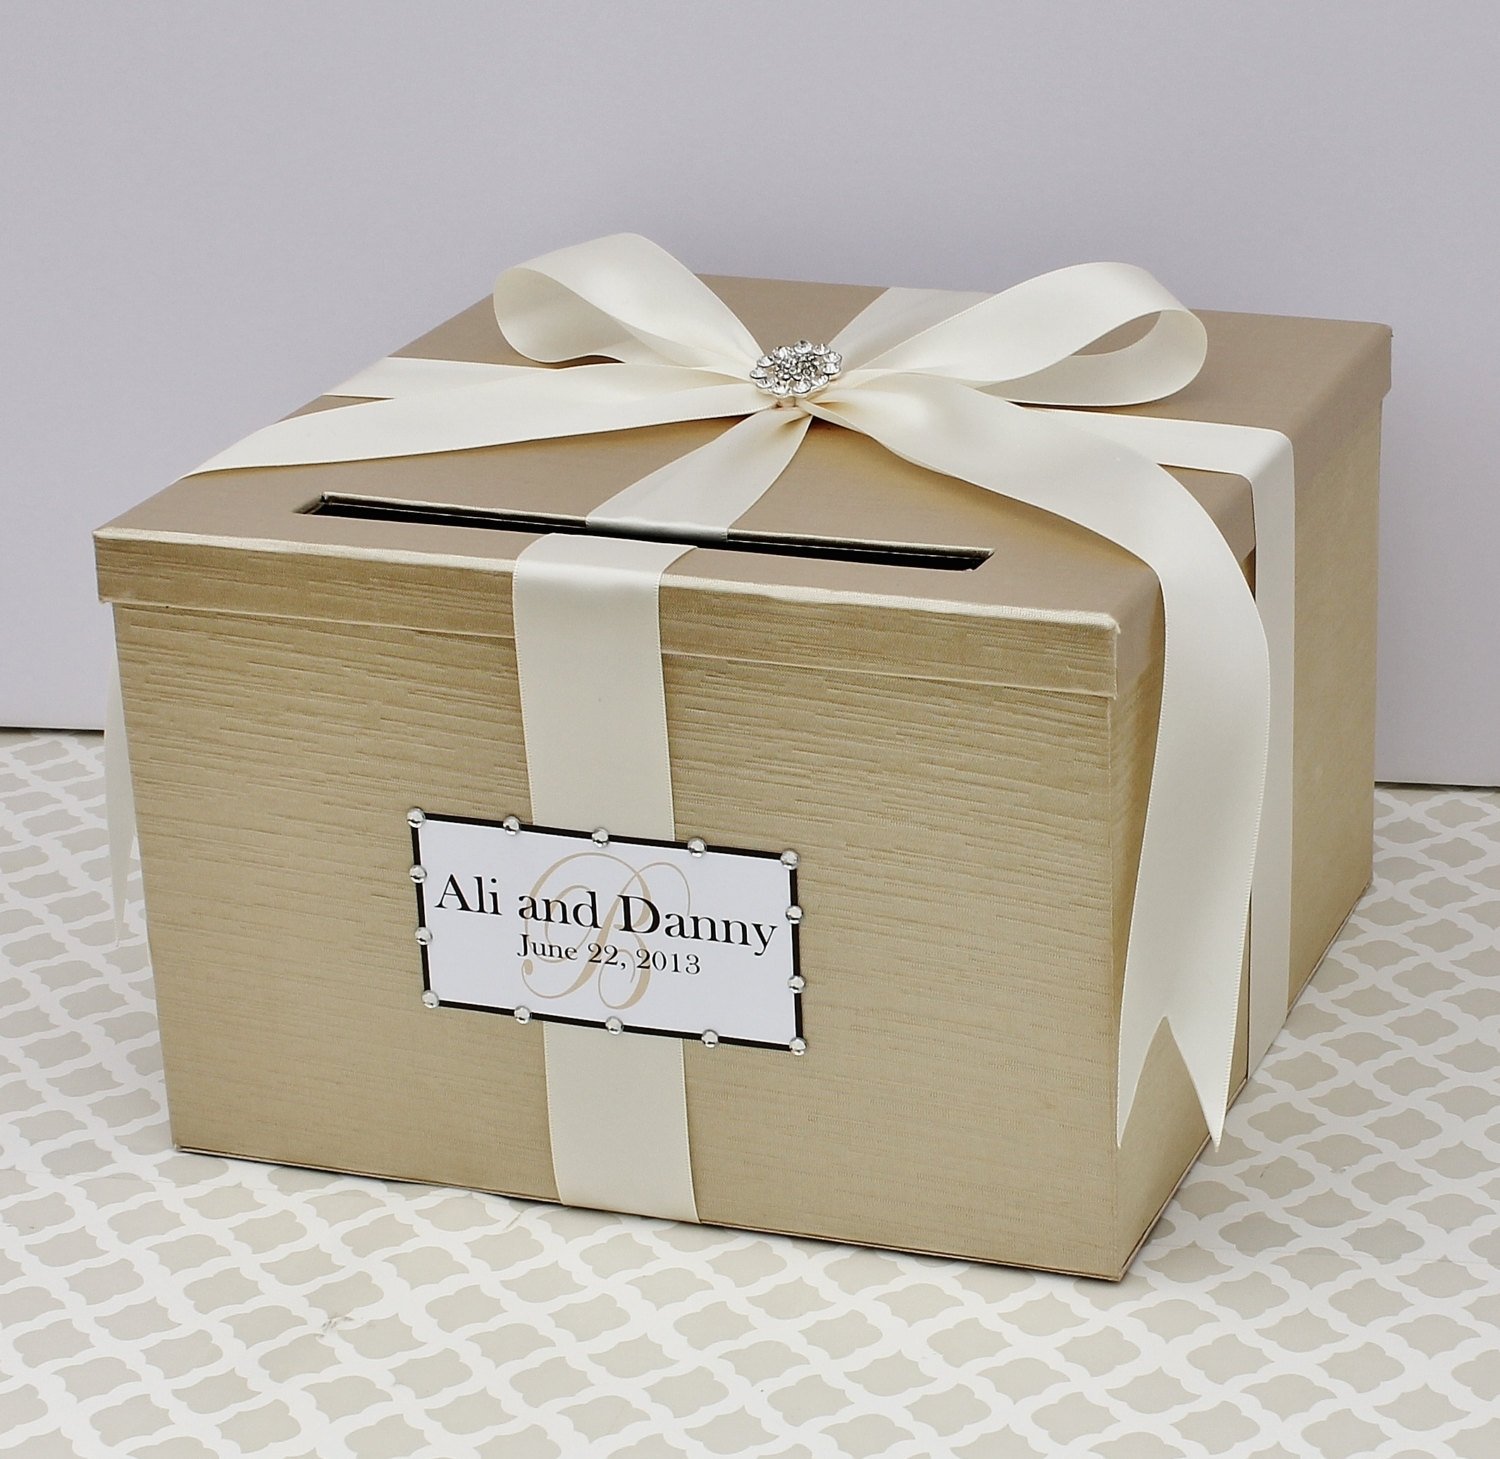 10 Most Popular Card Box Ideas For Wedding wedding card box champagne white lace holder custom mad on wedding 2023